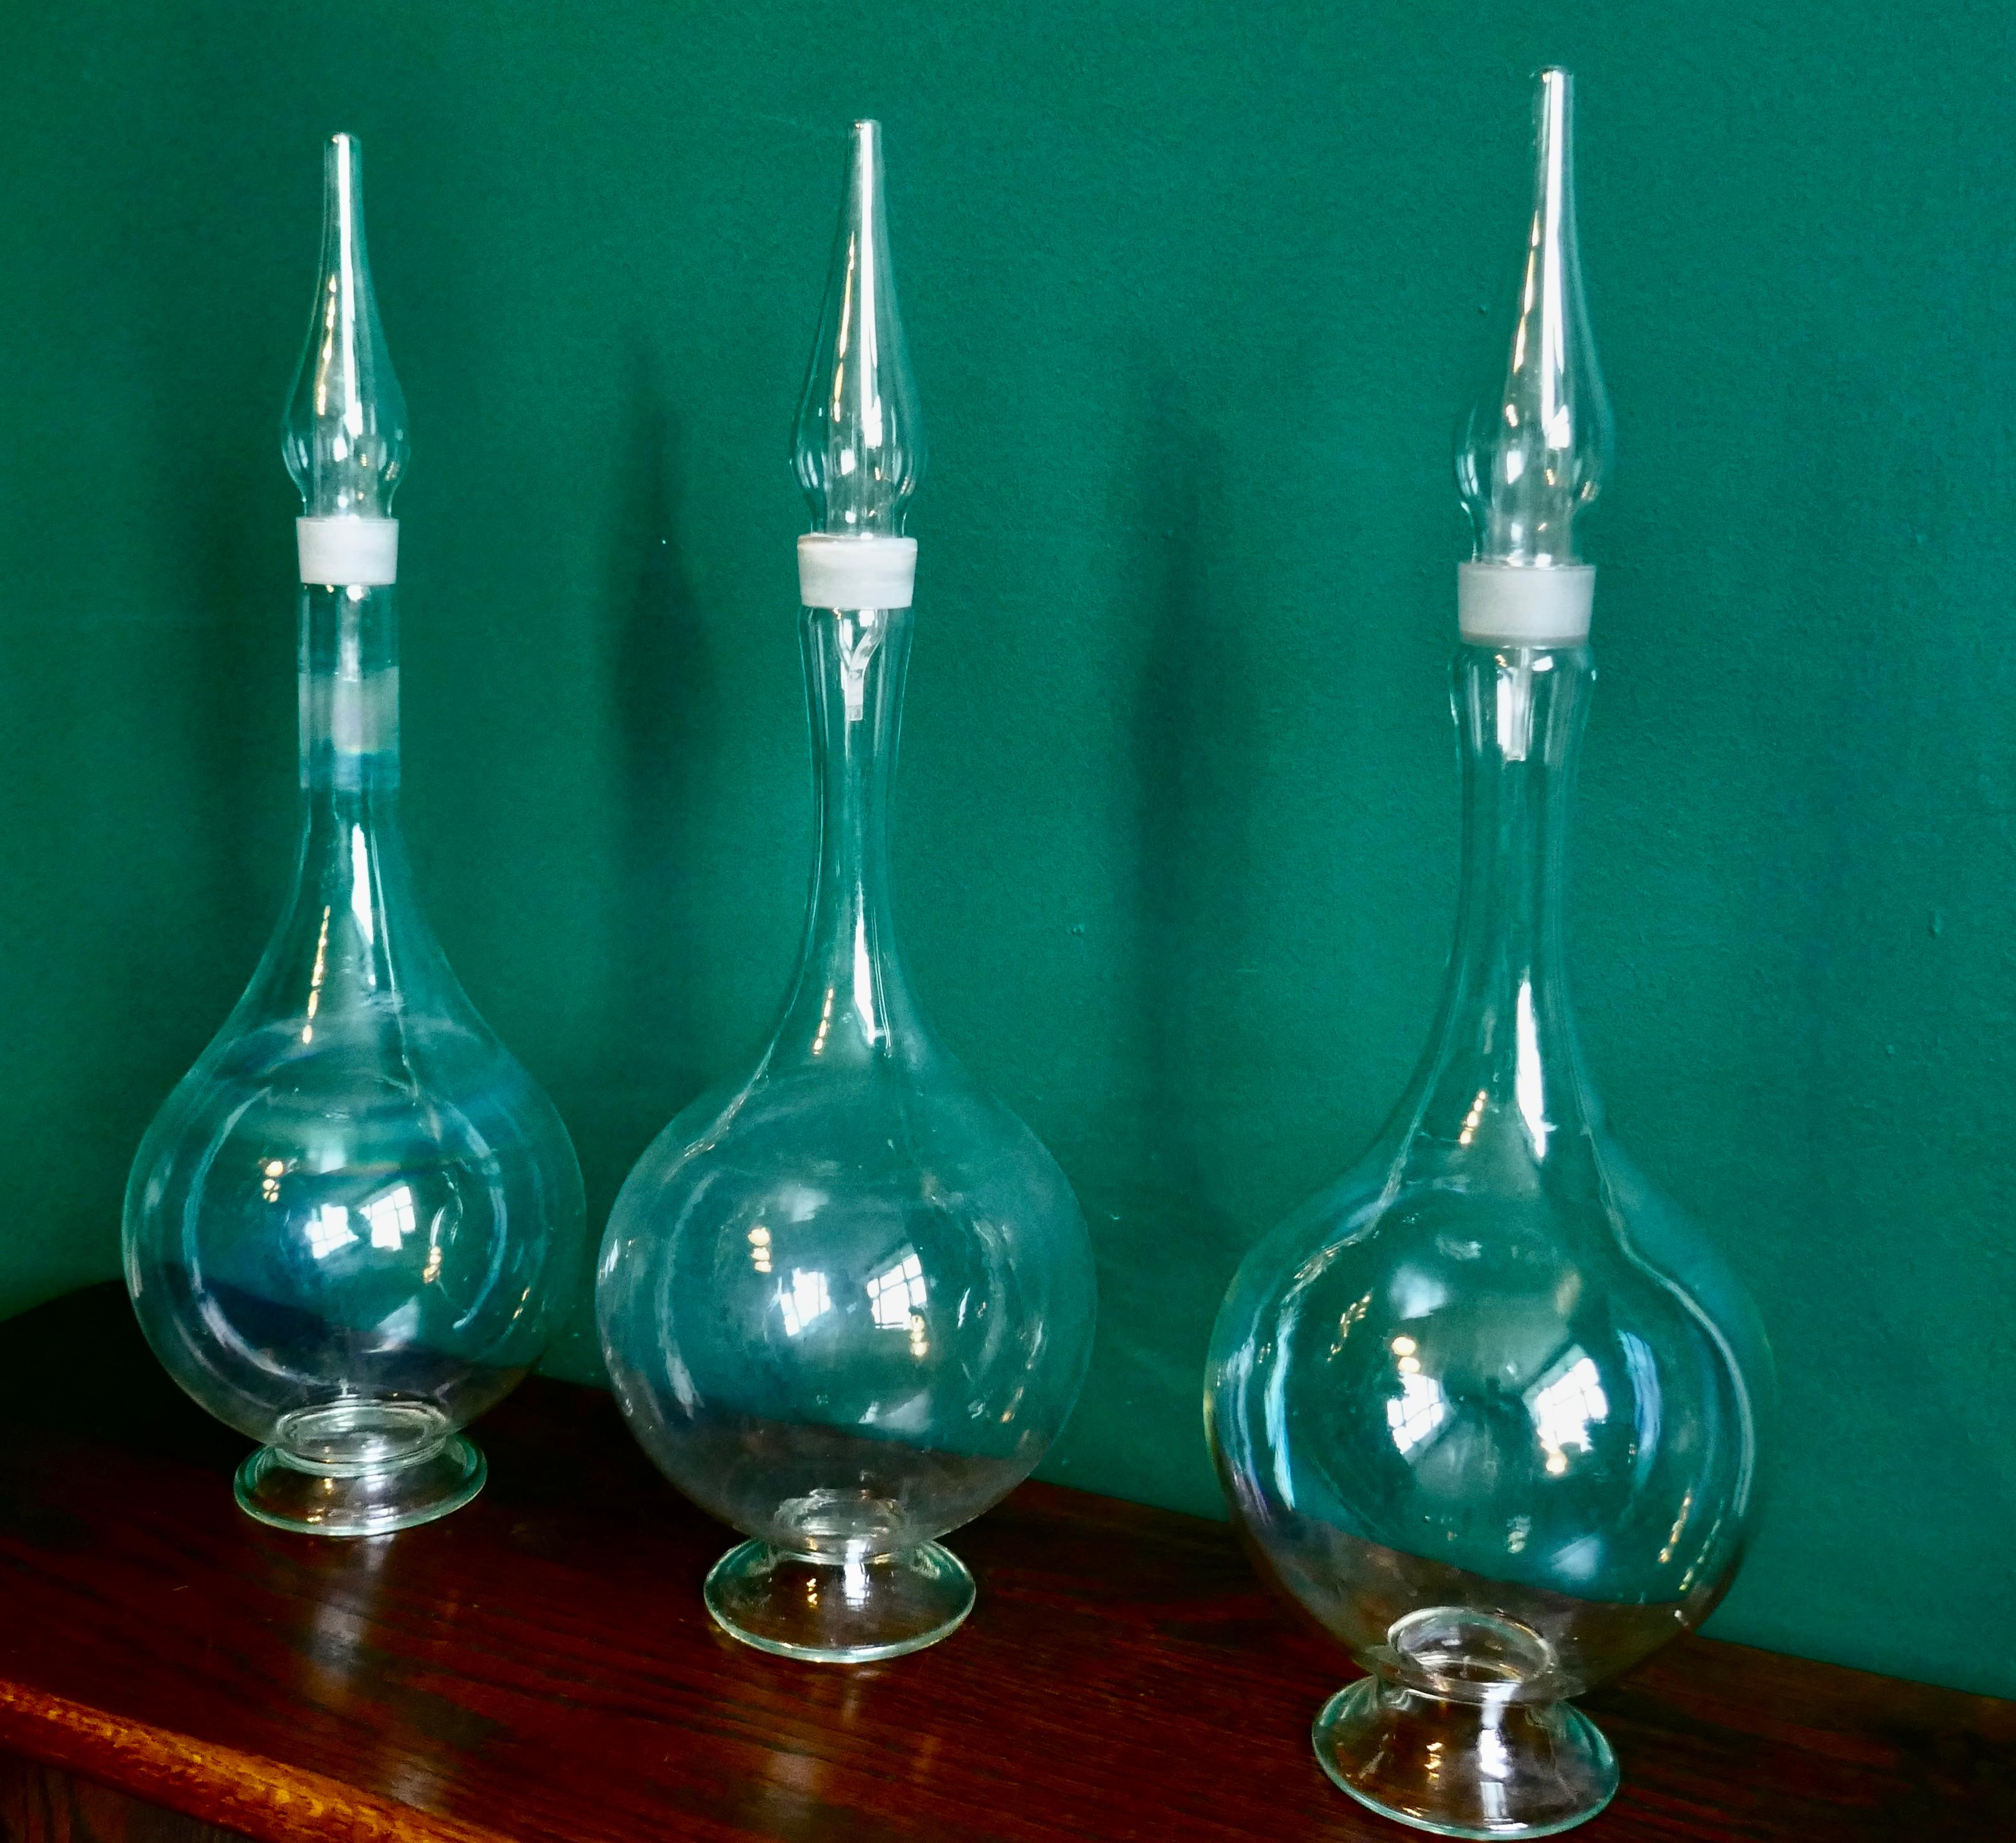 old chemist display bottles